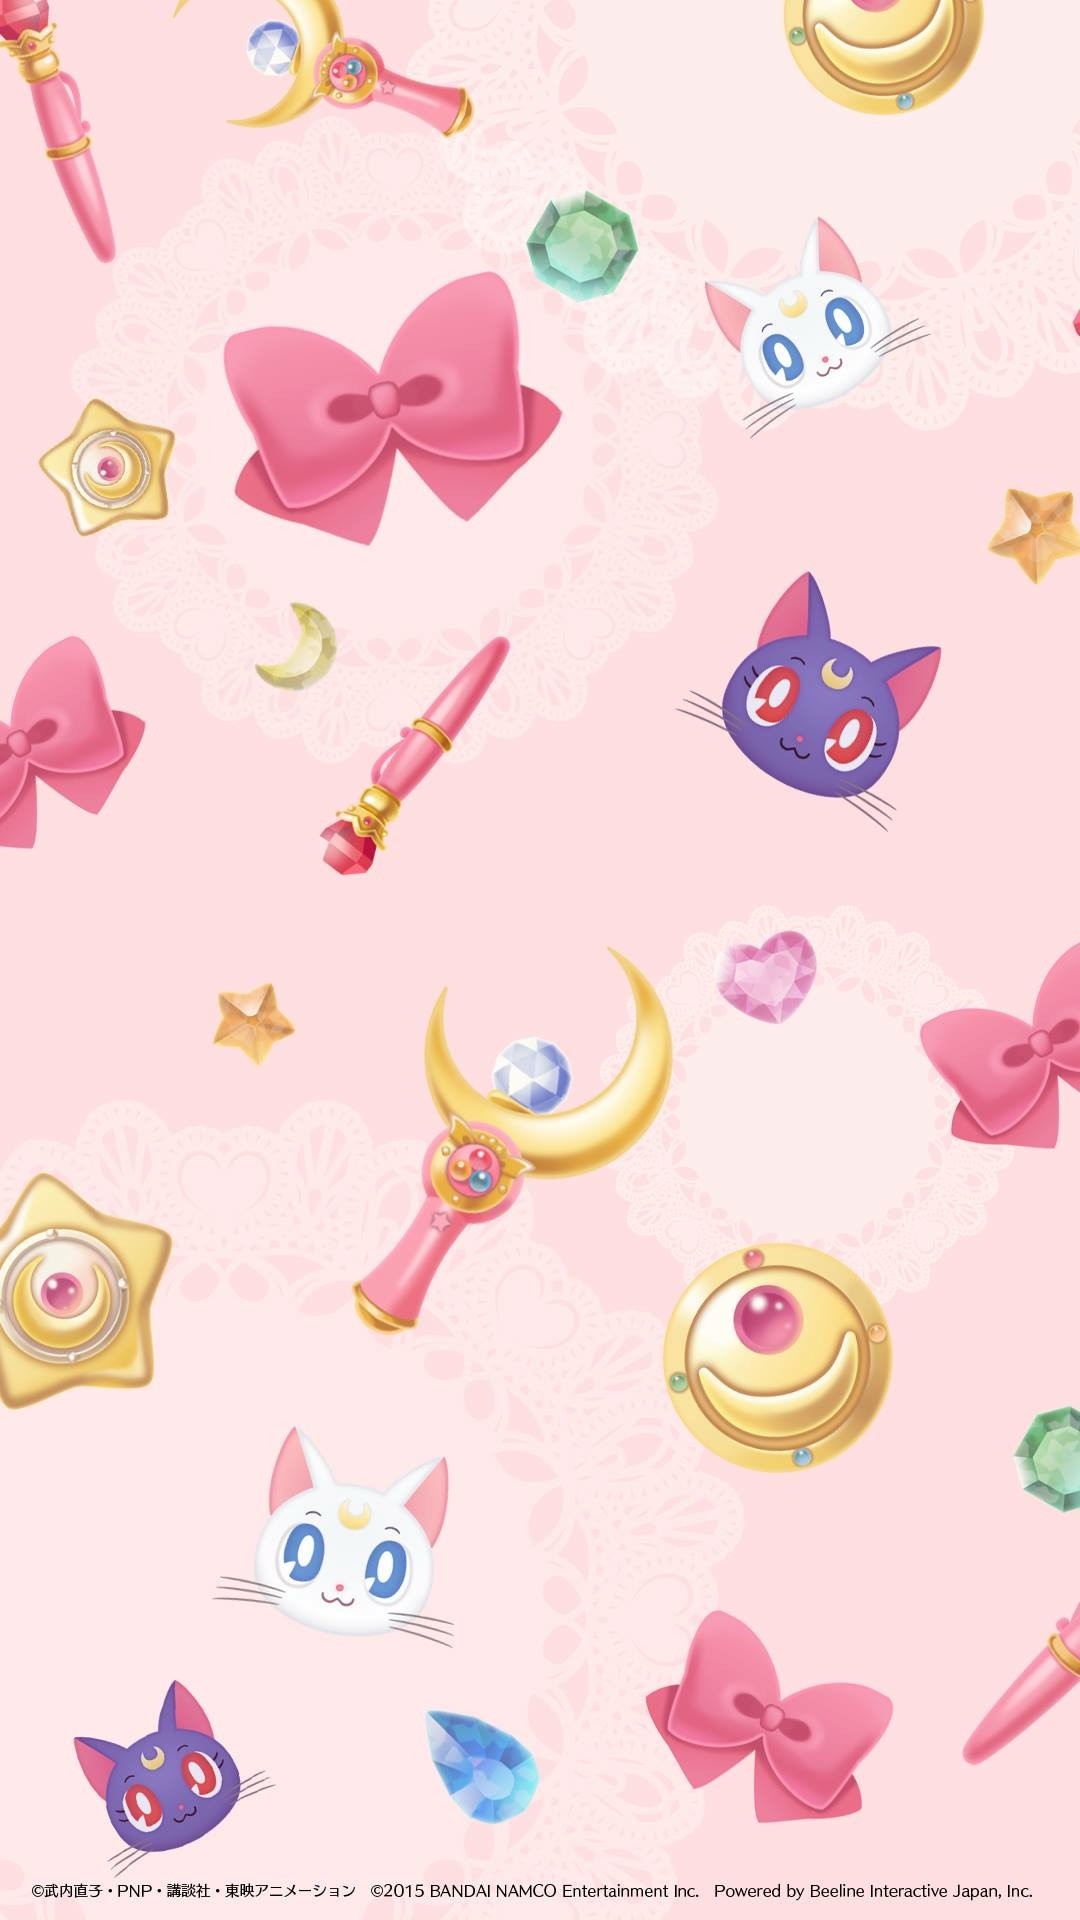 1080x1920 Wallpapers lindos de Sailor Moon pra usar no smartphone!